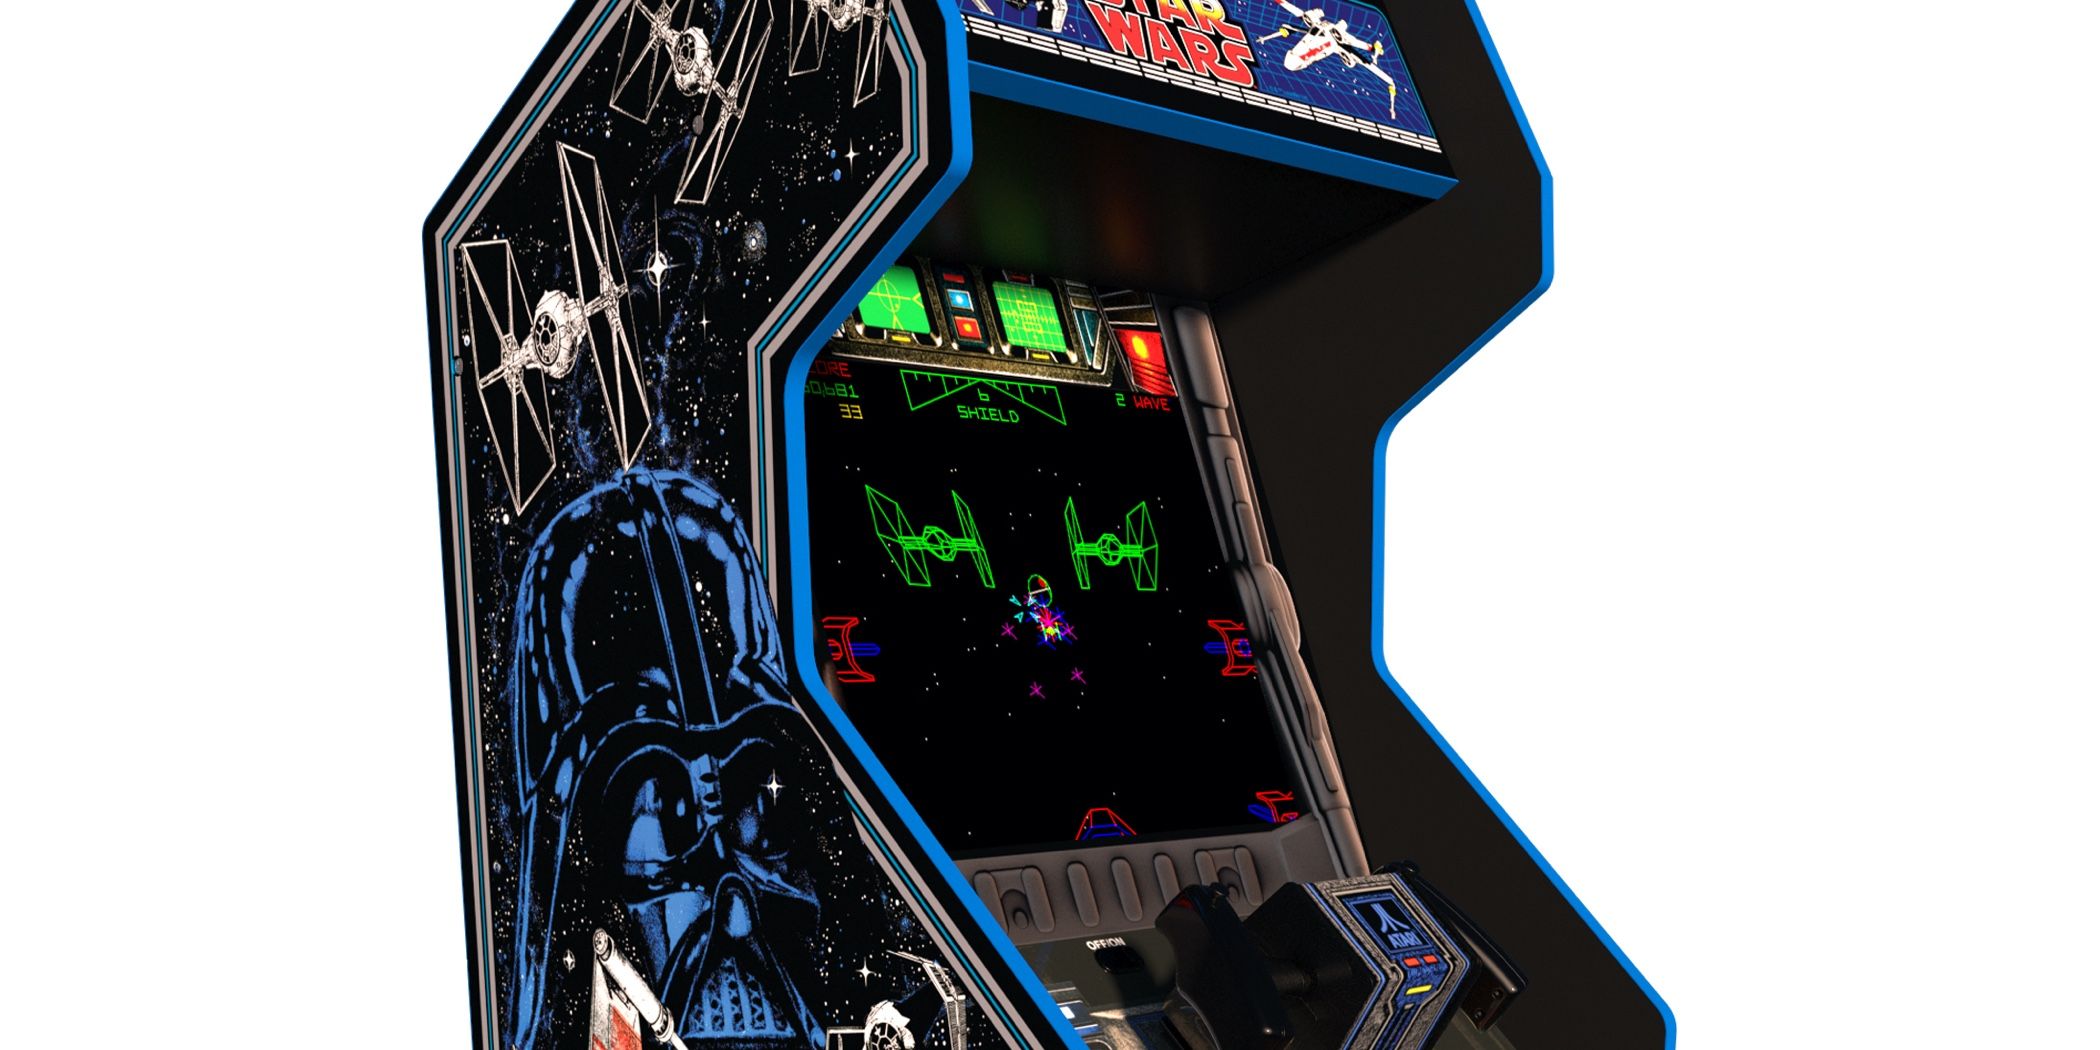 Arcade1UP Star Wars machine angle view